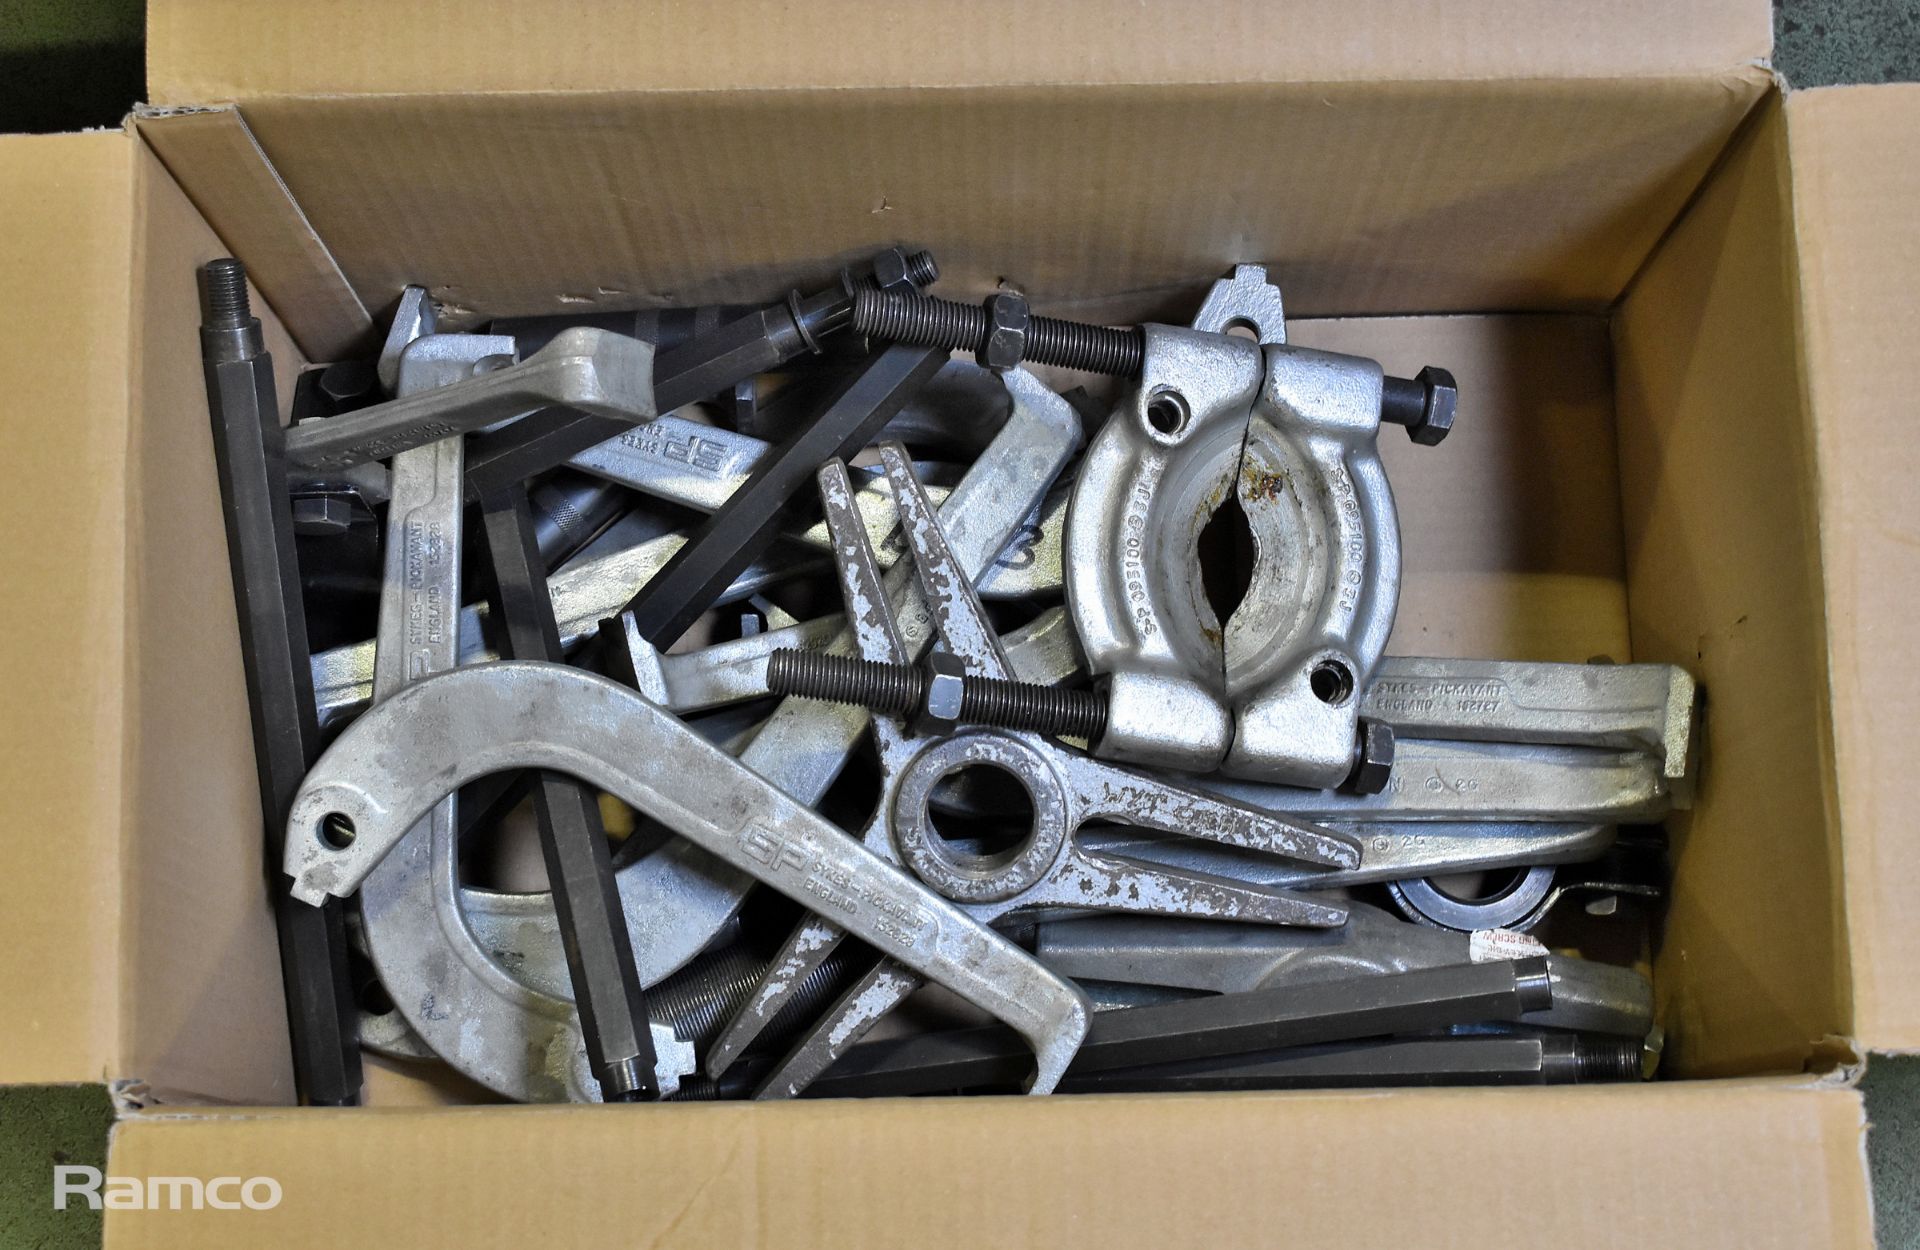 Sykes Pickavant bearing separator & puller removal kit (no case)